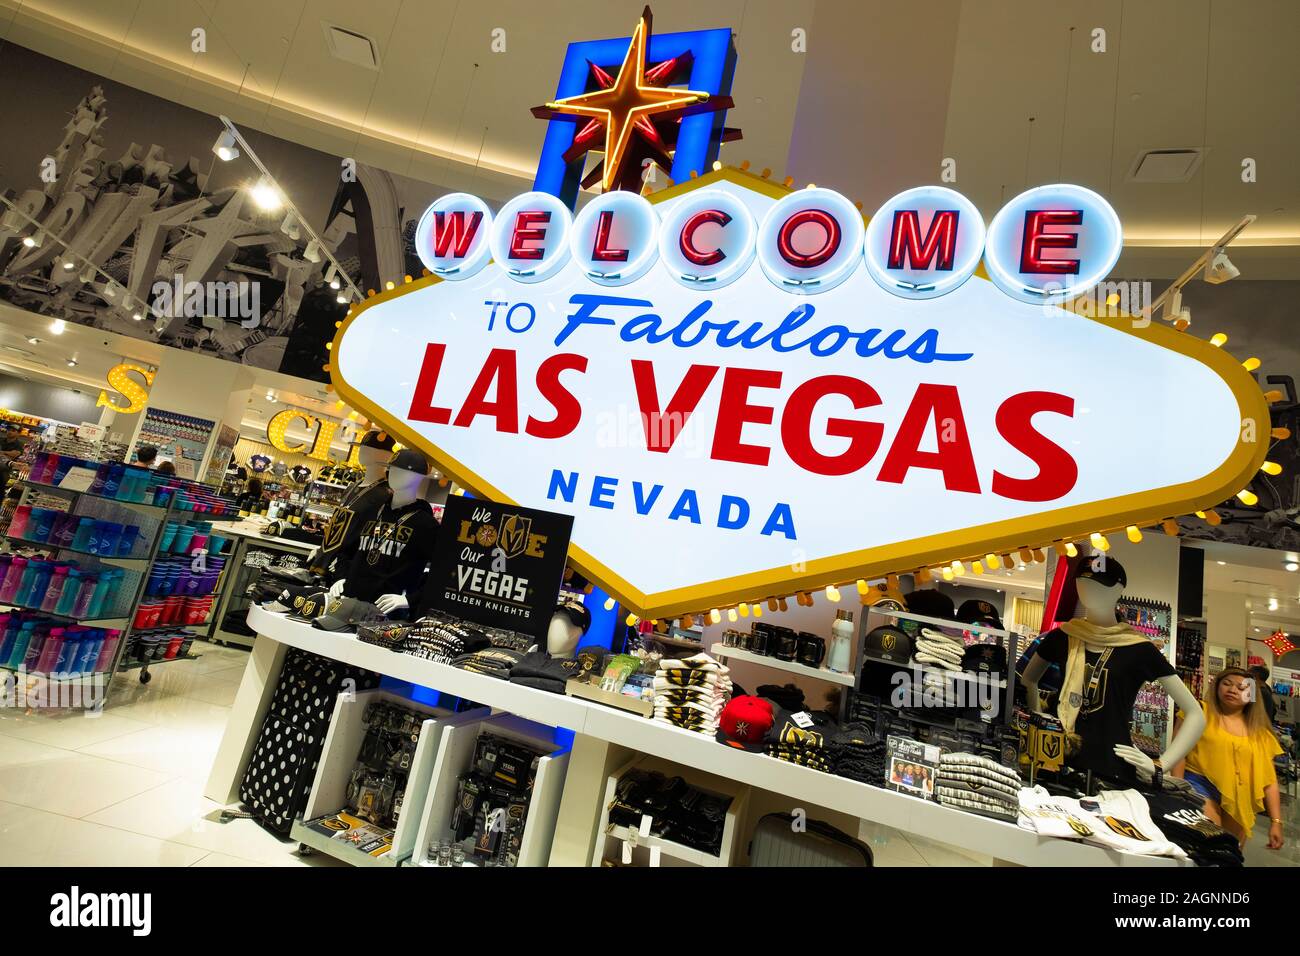 Interior shot of a large Las Vegas sign on display in a souvenir shop inside the Forum Shops, Las Vegas, Nevada, USA Stock Photo